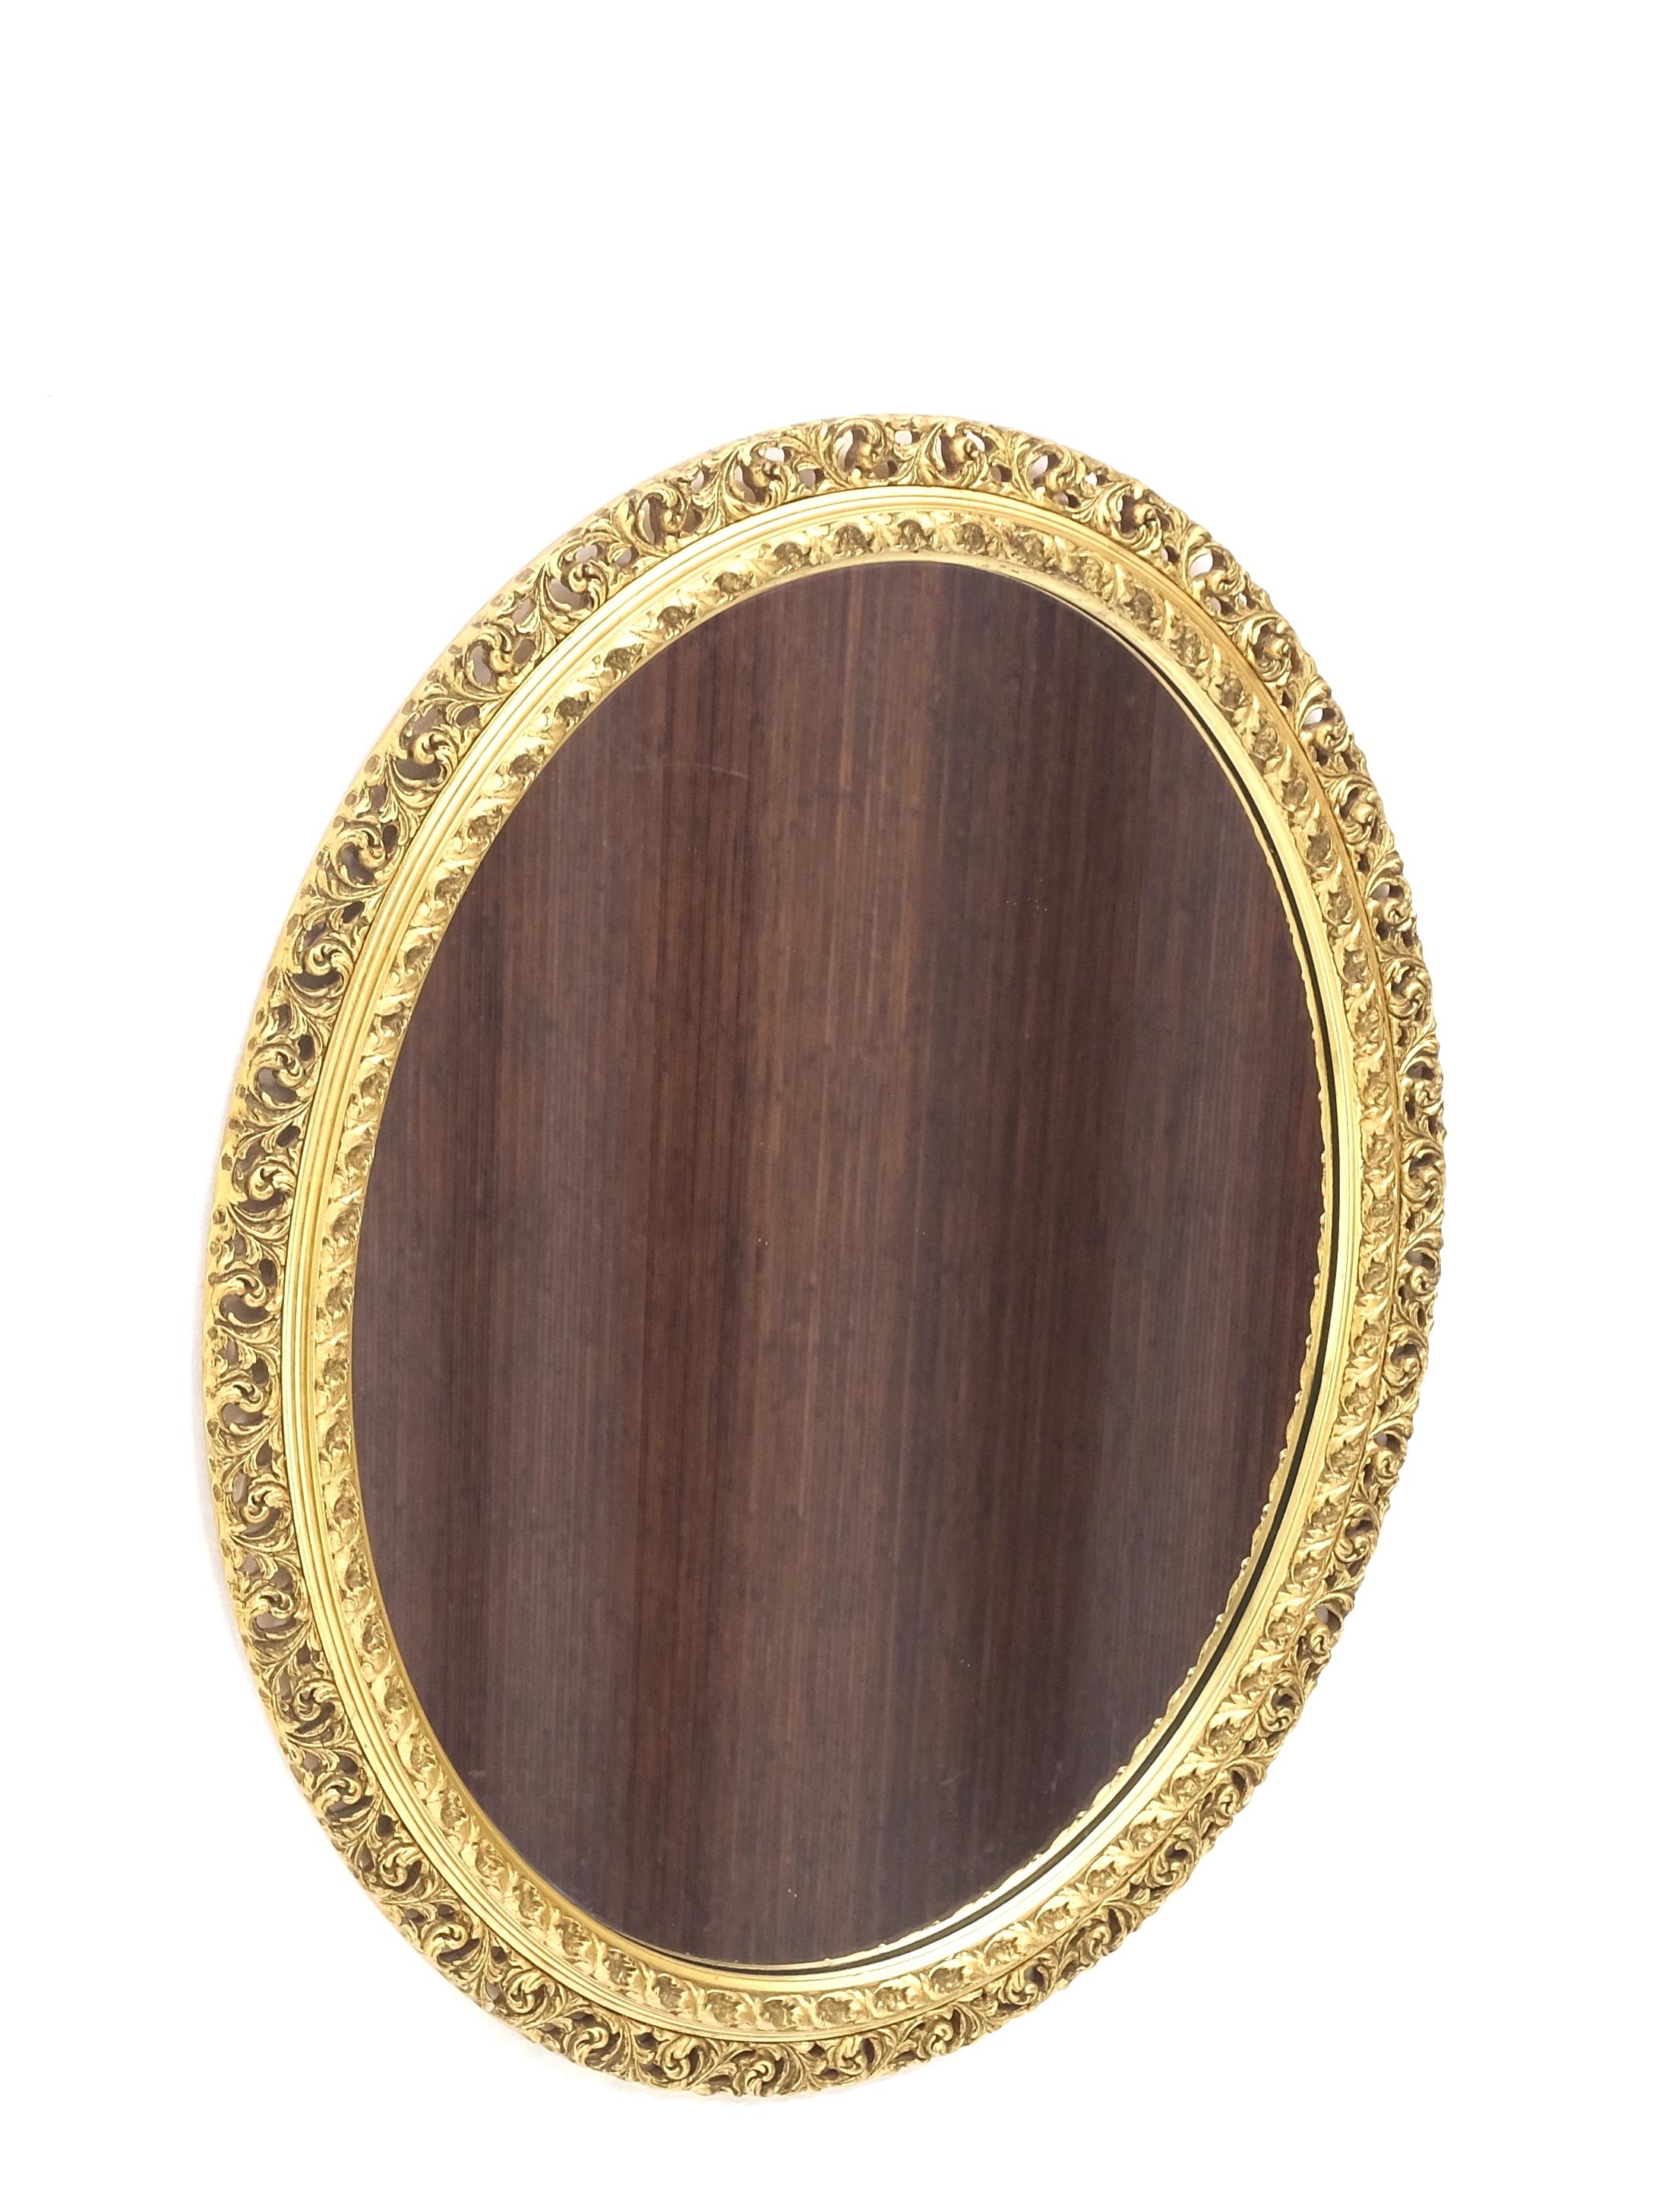 Oval Gesso & Holz geschnitzt Gold vergoldeten Rahmen Wandspiegel MINT! (amerikanisch) im Angebot